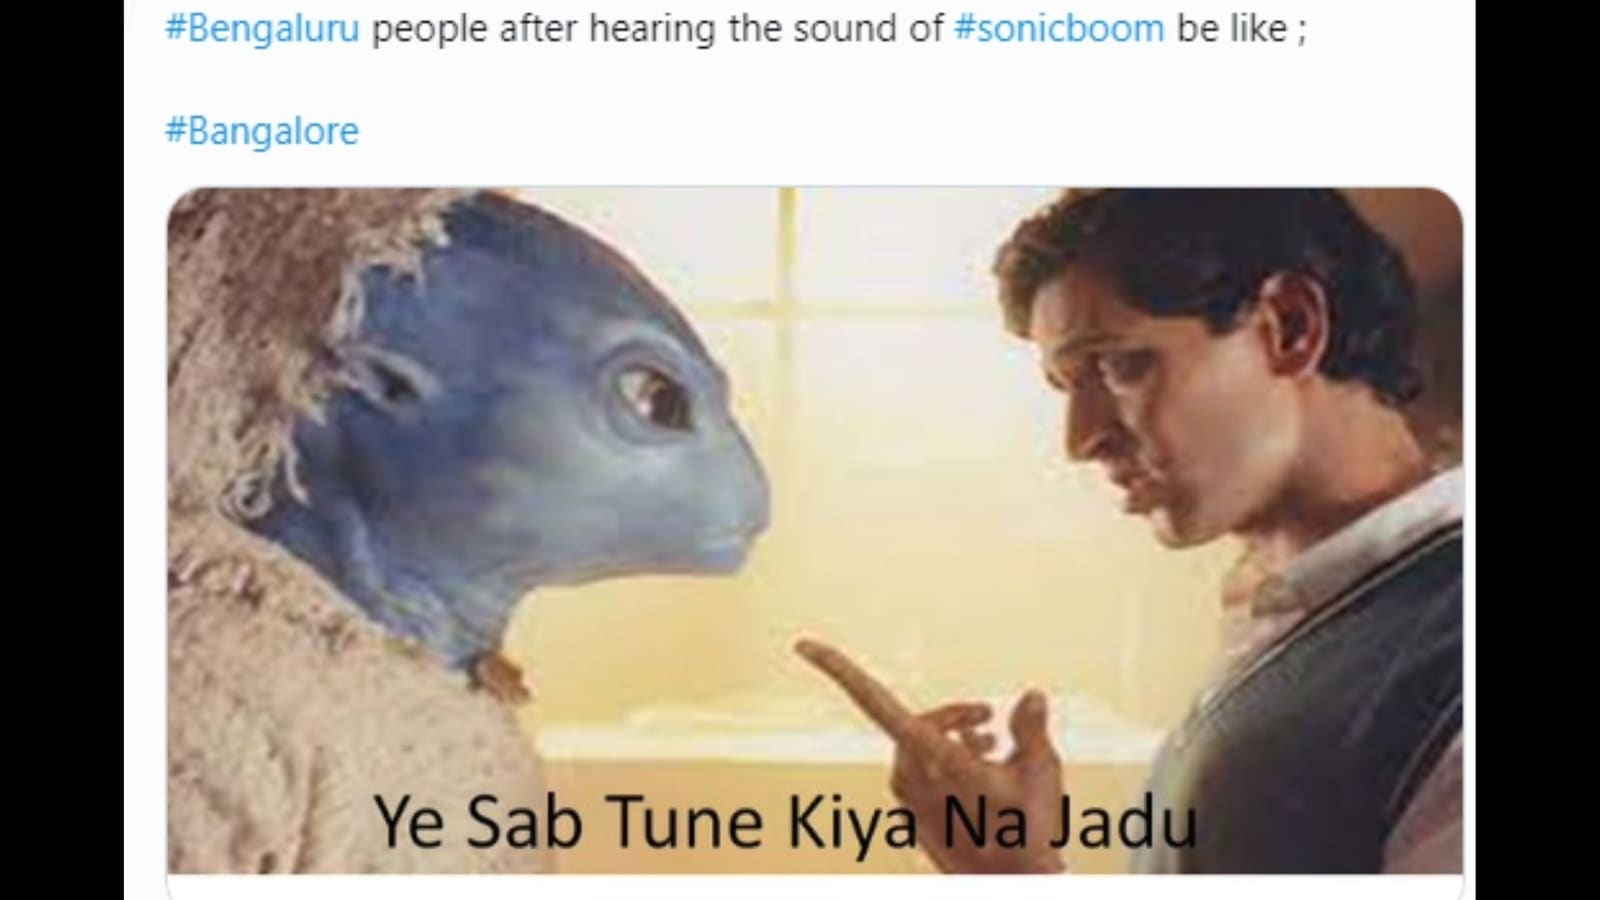 Alien memes erupt on Twitter after sonic boom in Bengaluru on World UFO